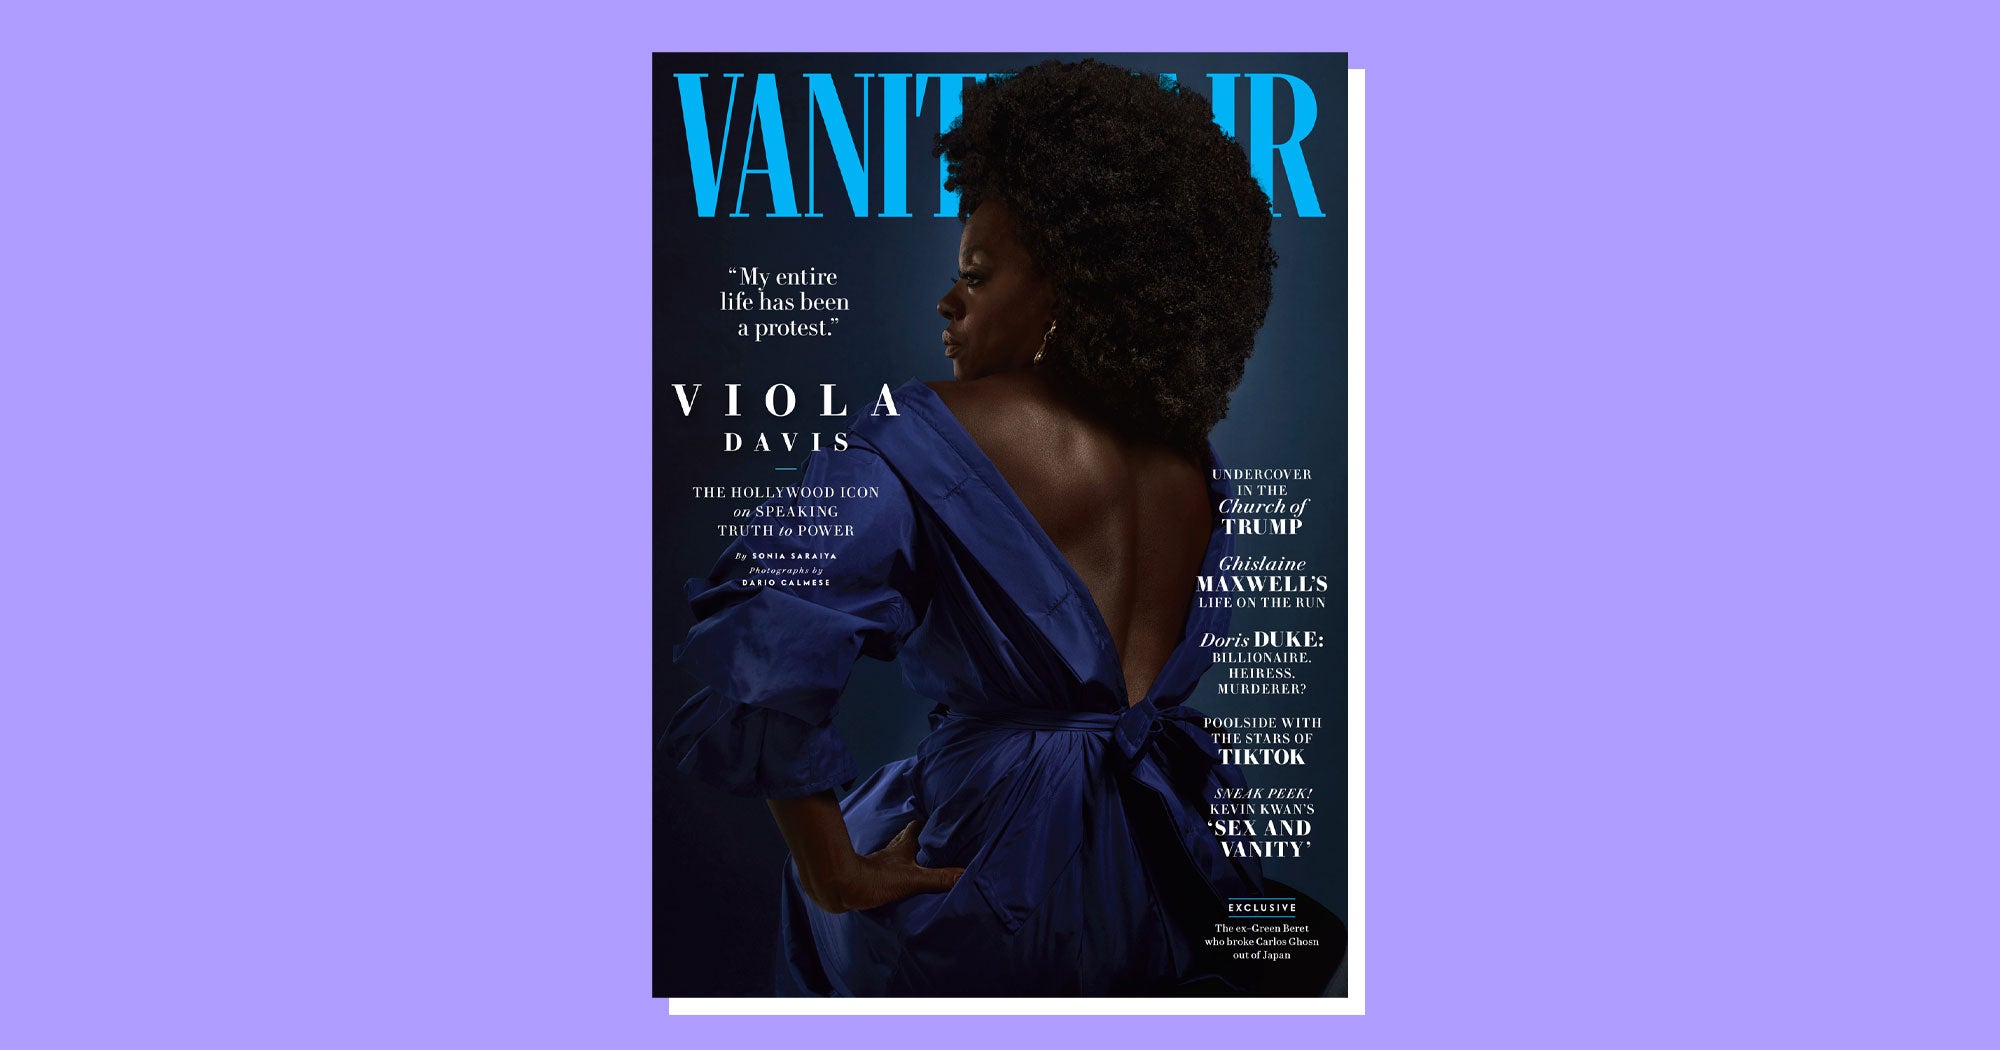 Viola Davis Covers 'Vanity Fair' In 1st Cover Taken By Black